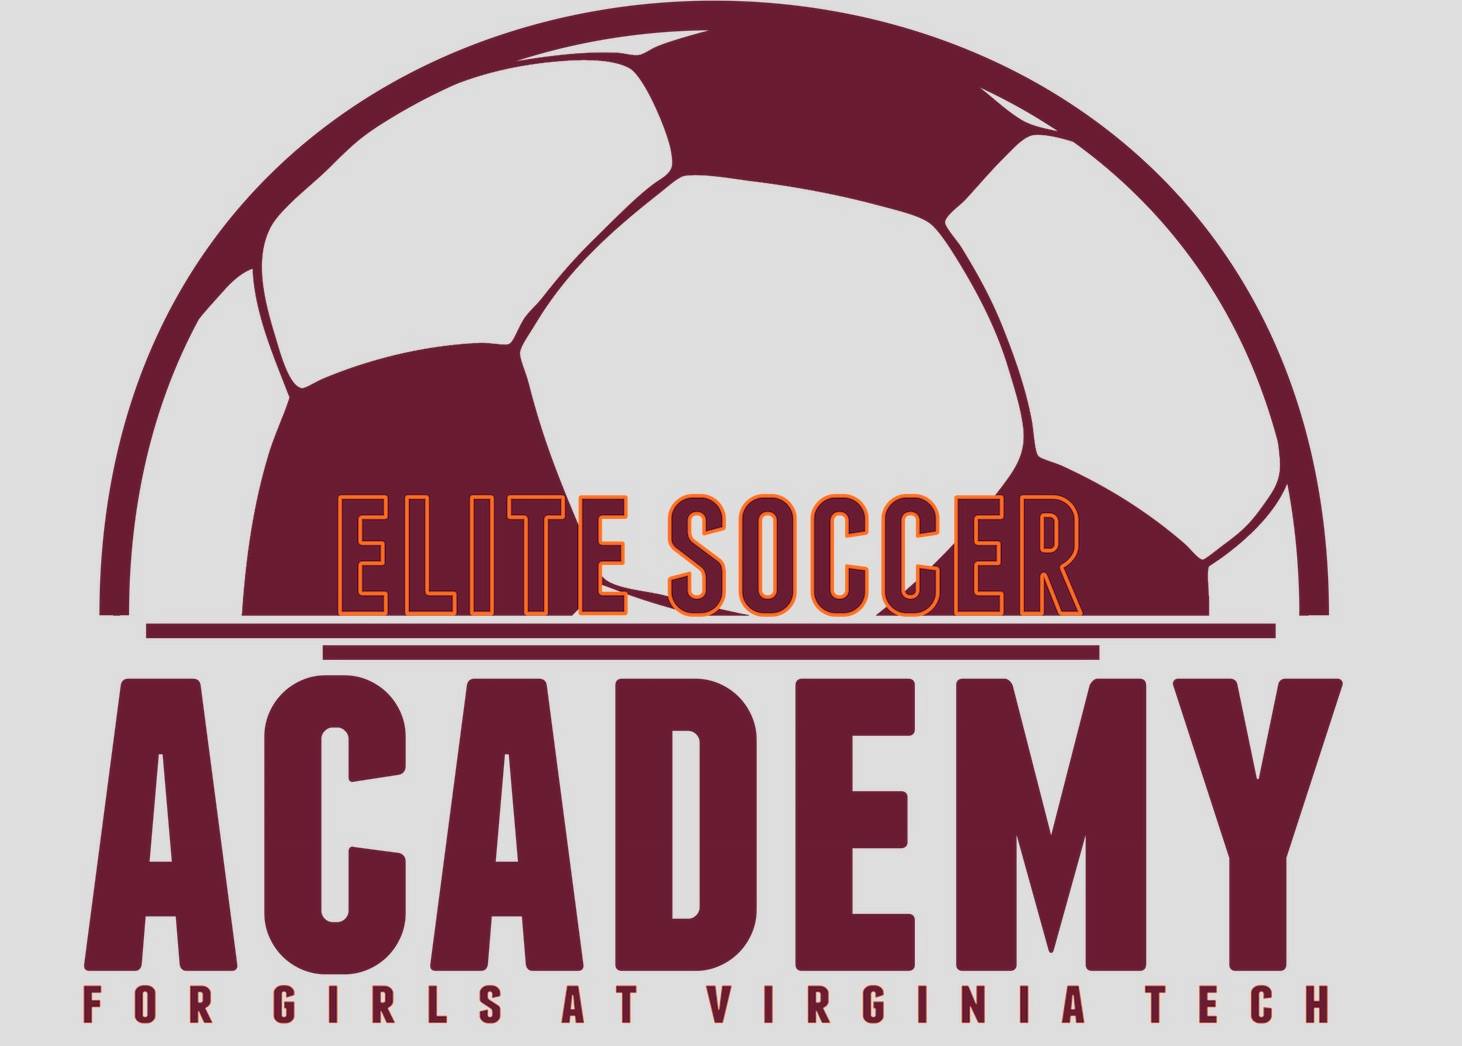 Elite Soccer Academy at Virginia Tech Macaroni KID Roanoke